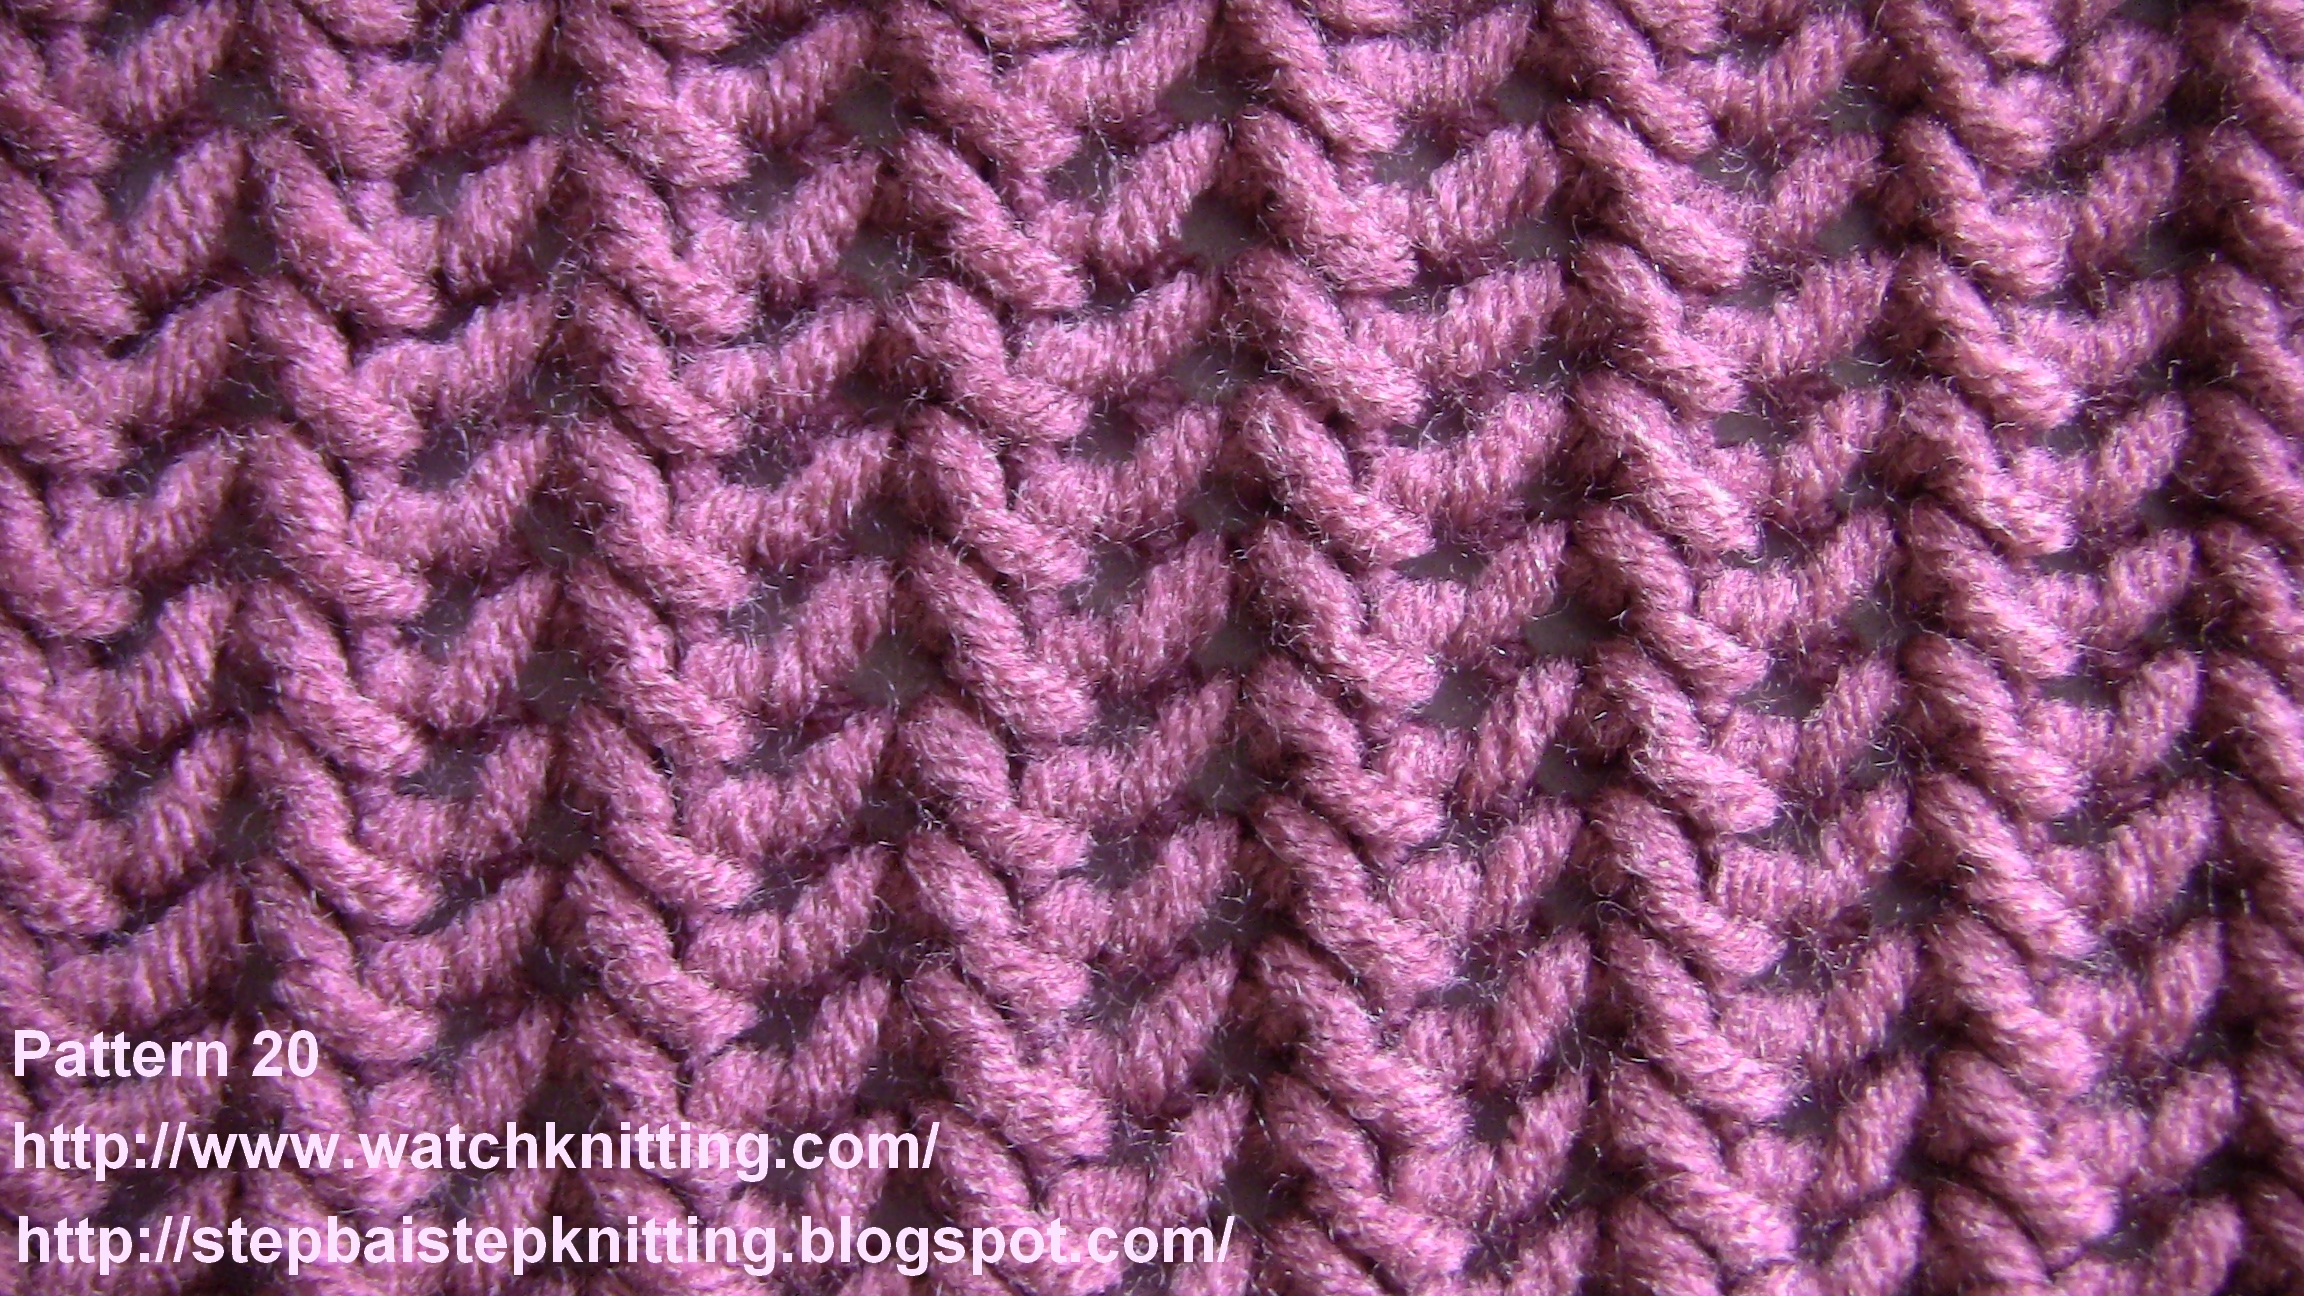 NobleKnits Knitting Blog: Free Scarf Pattern - One Ball Lace Scarf